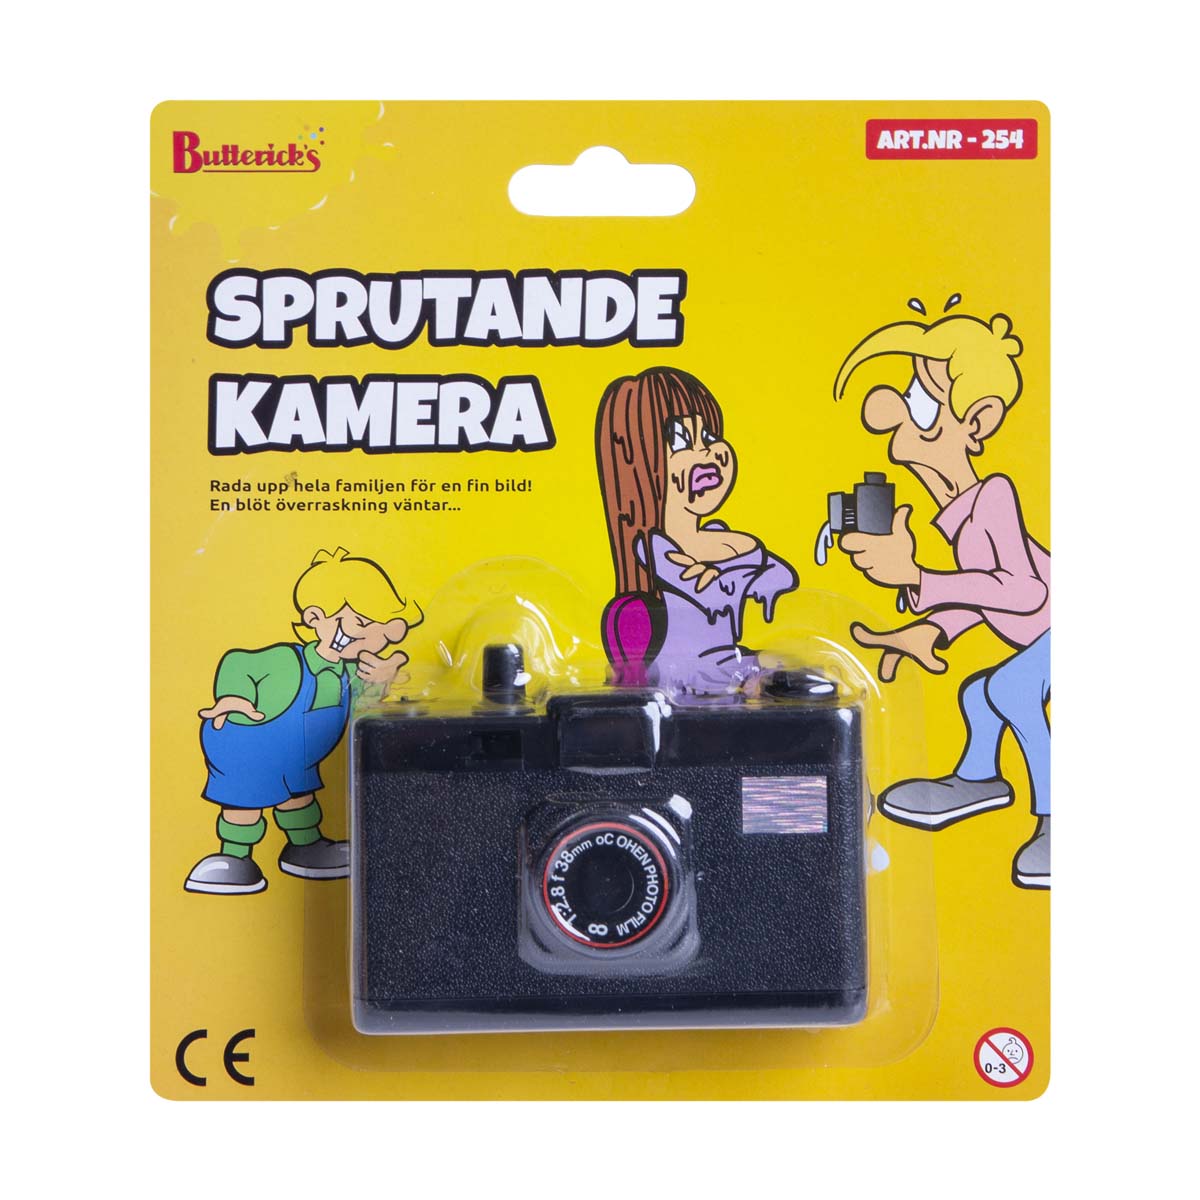 Sprutande kamera